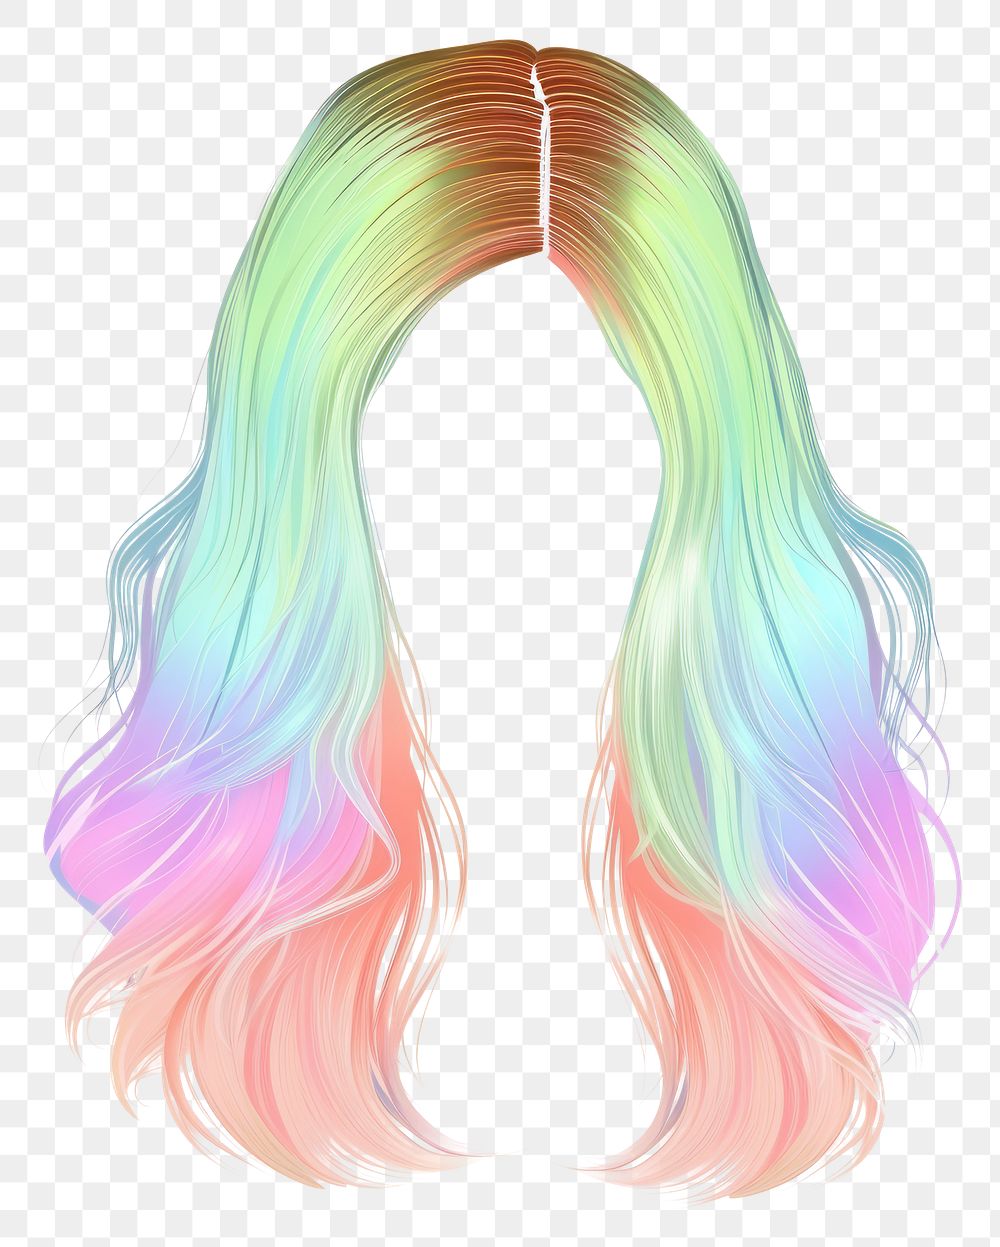 Rainbow pastel hairstlye hairstyle fashion drawing.